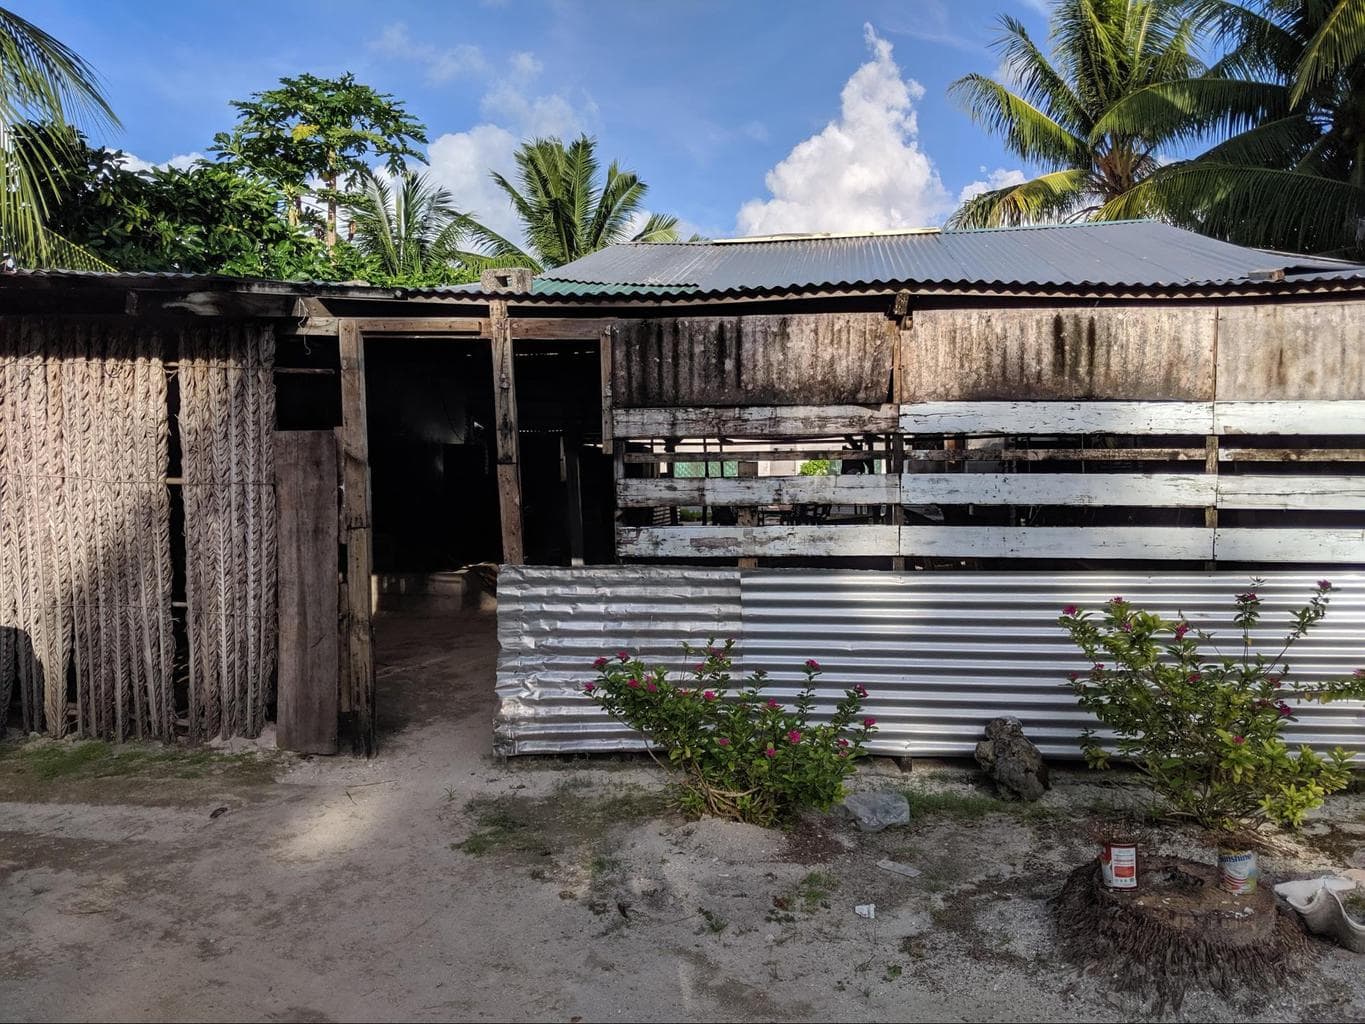 Kava bar in Kiribati